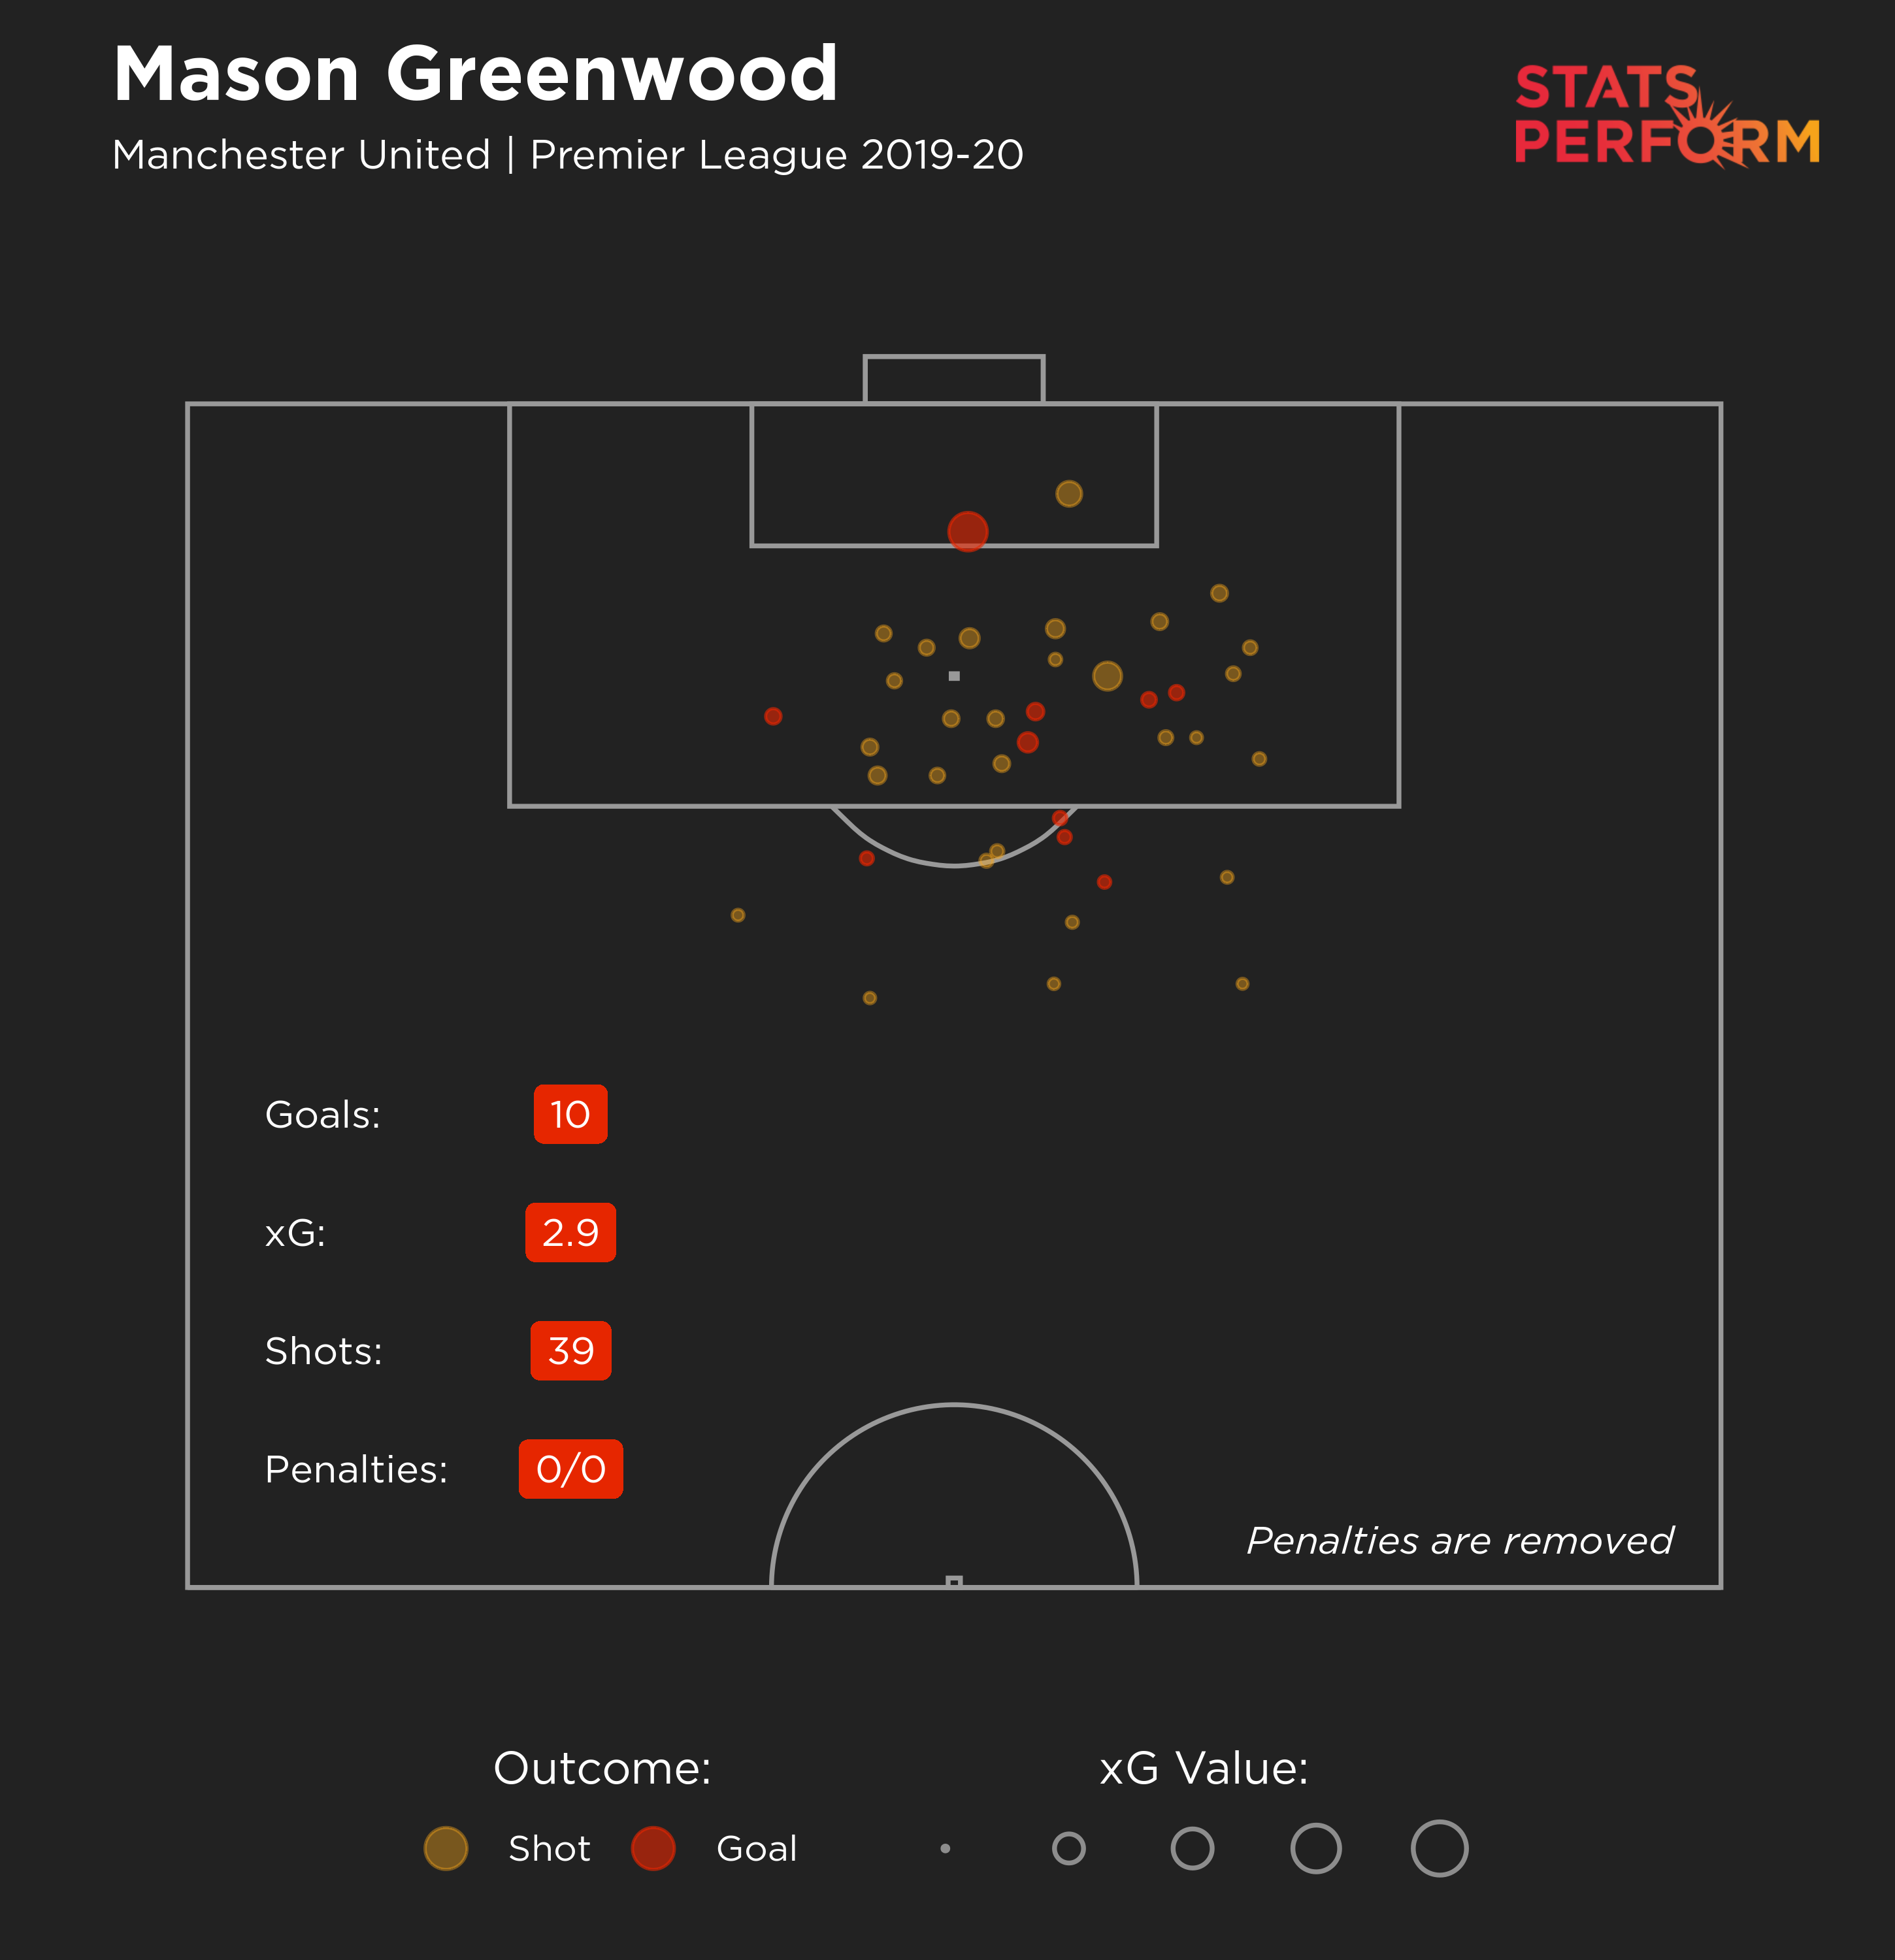 Greenwood was deadly in front of goal last season - perhaps he's Cavani's replacement?